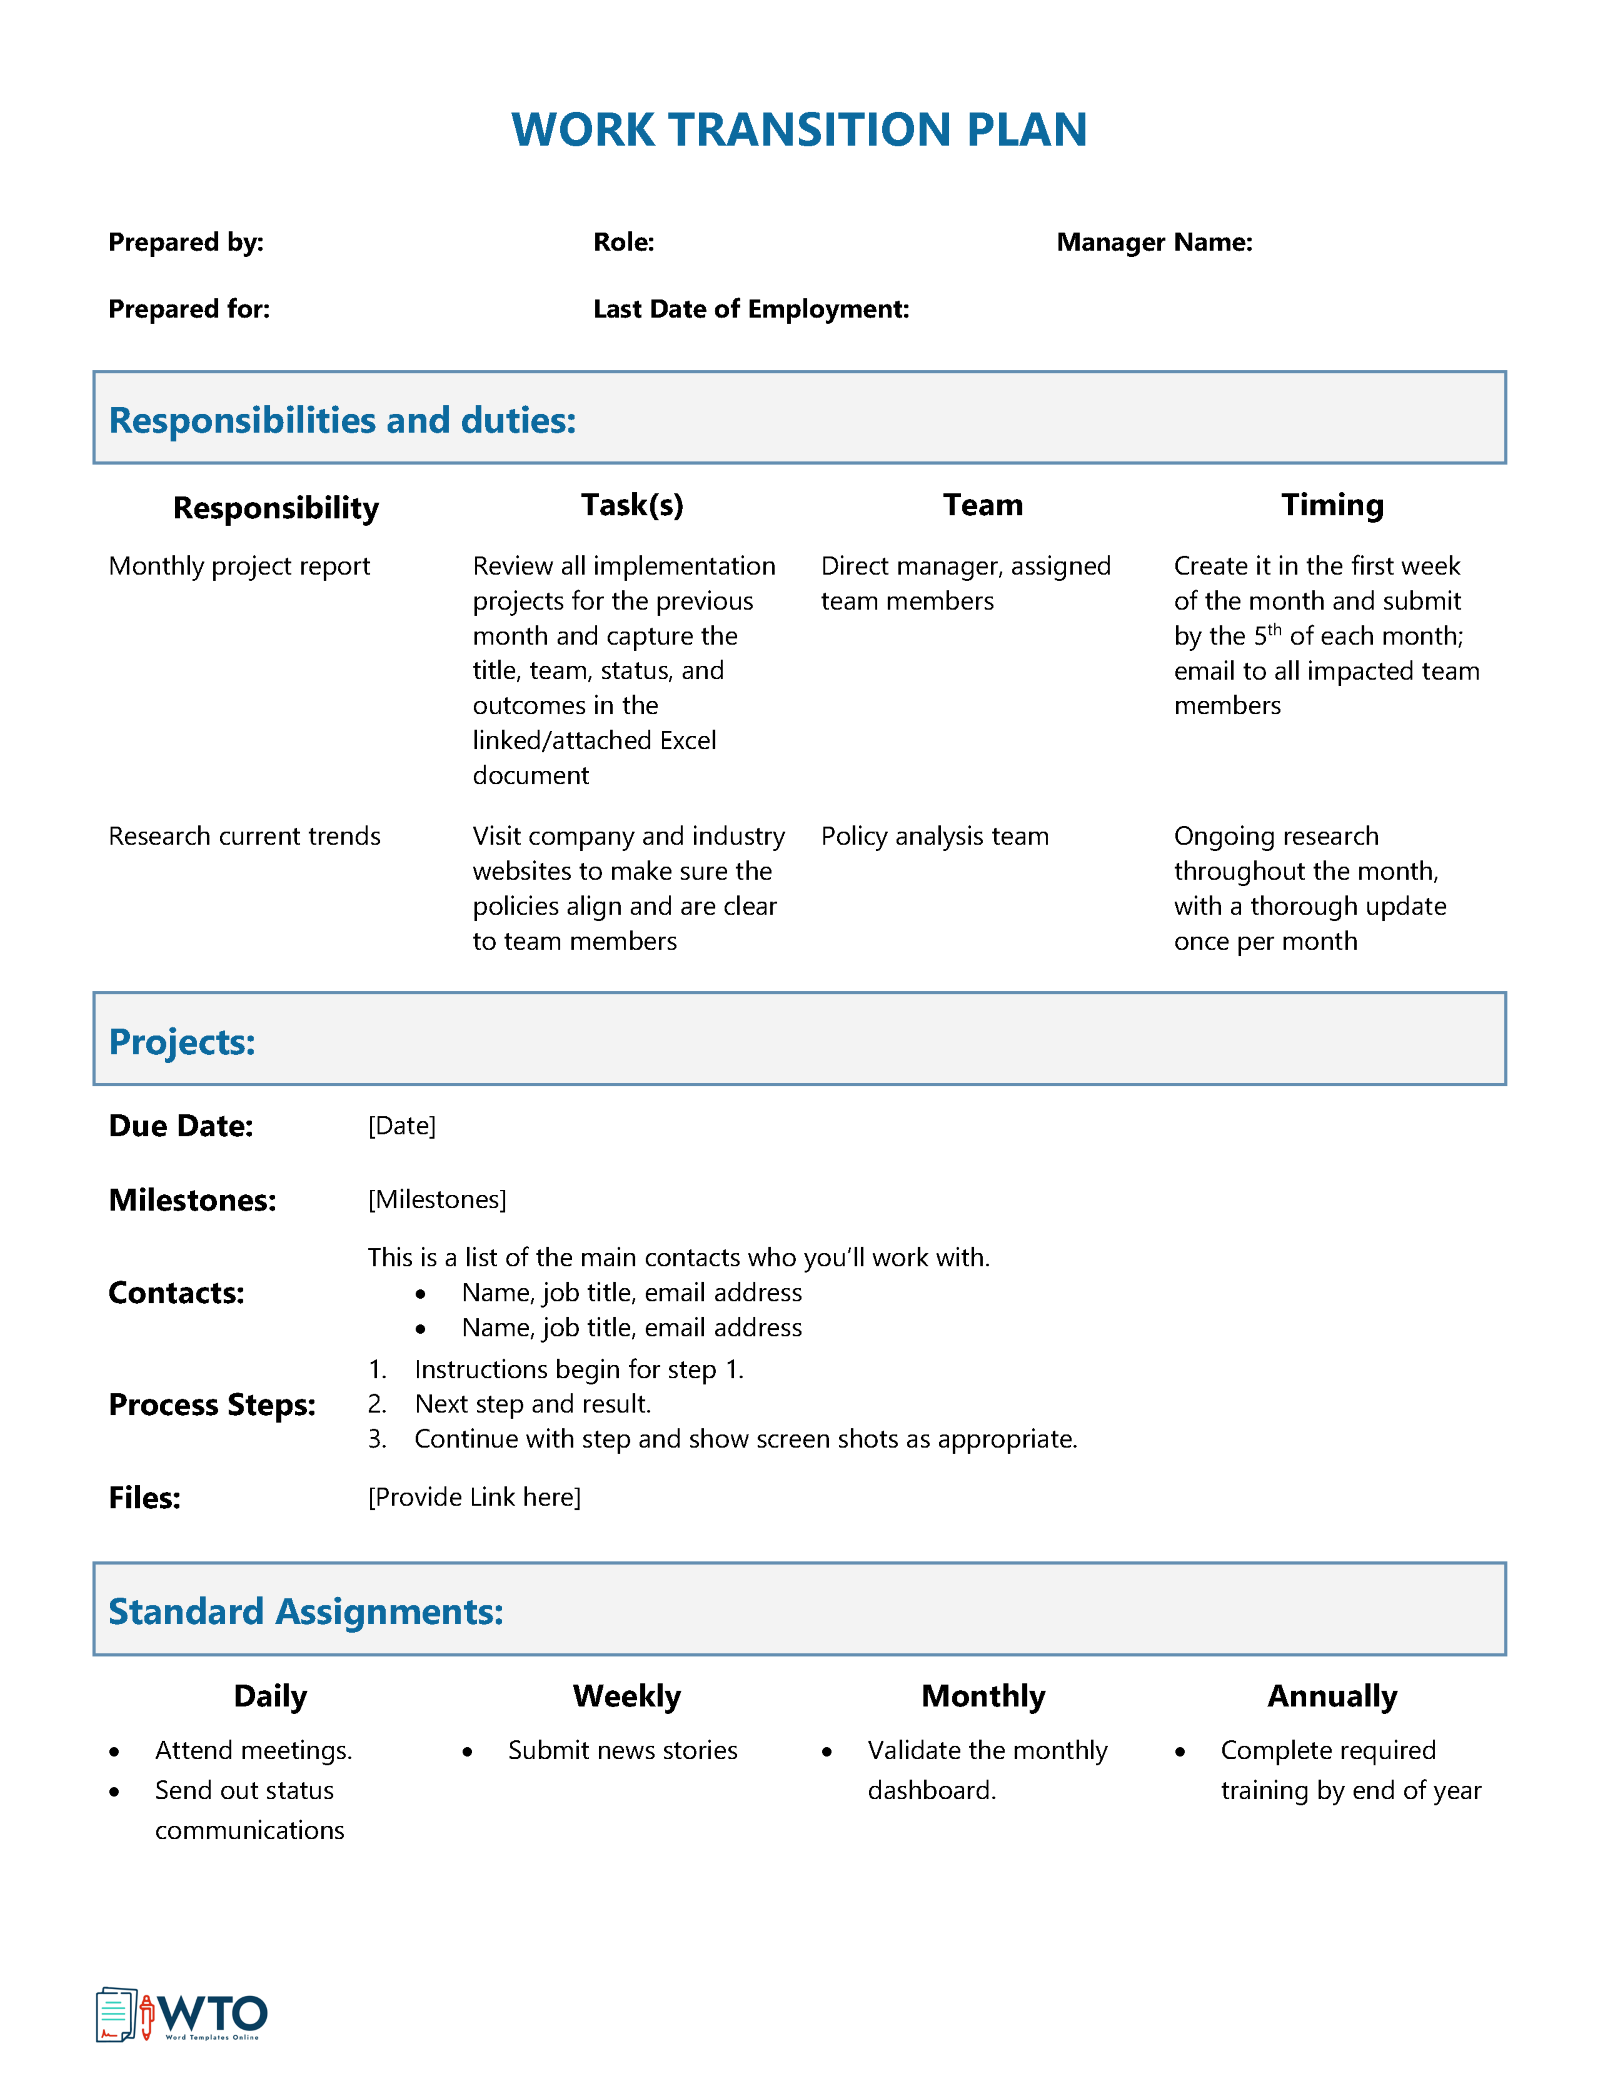 Work Transition Plan Template Format